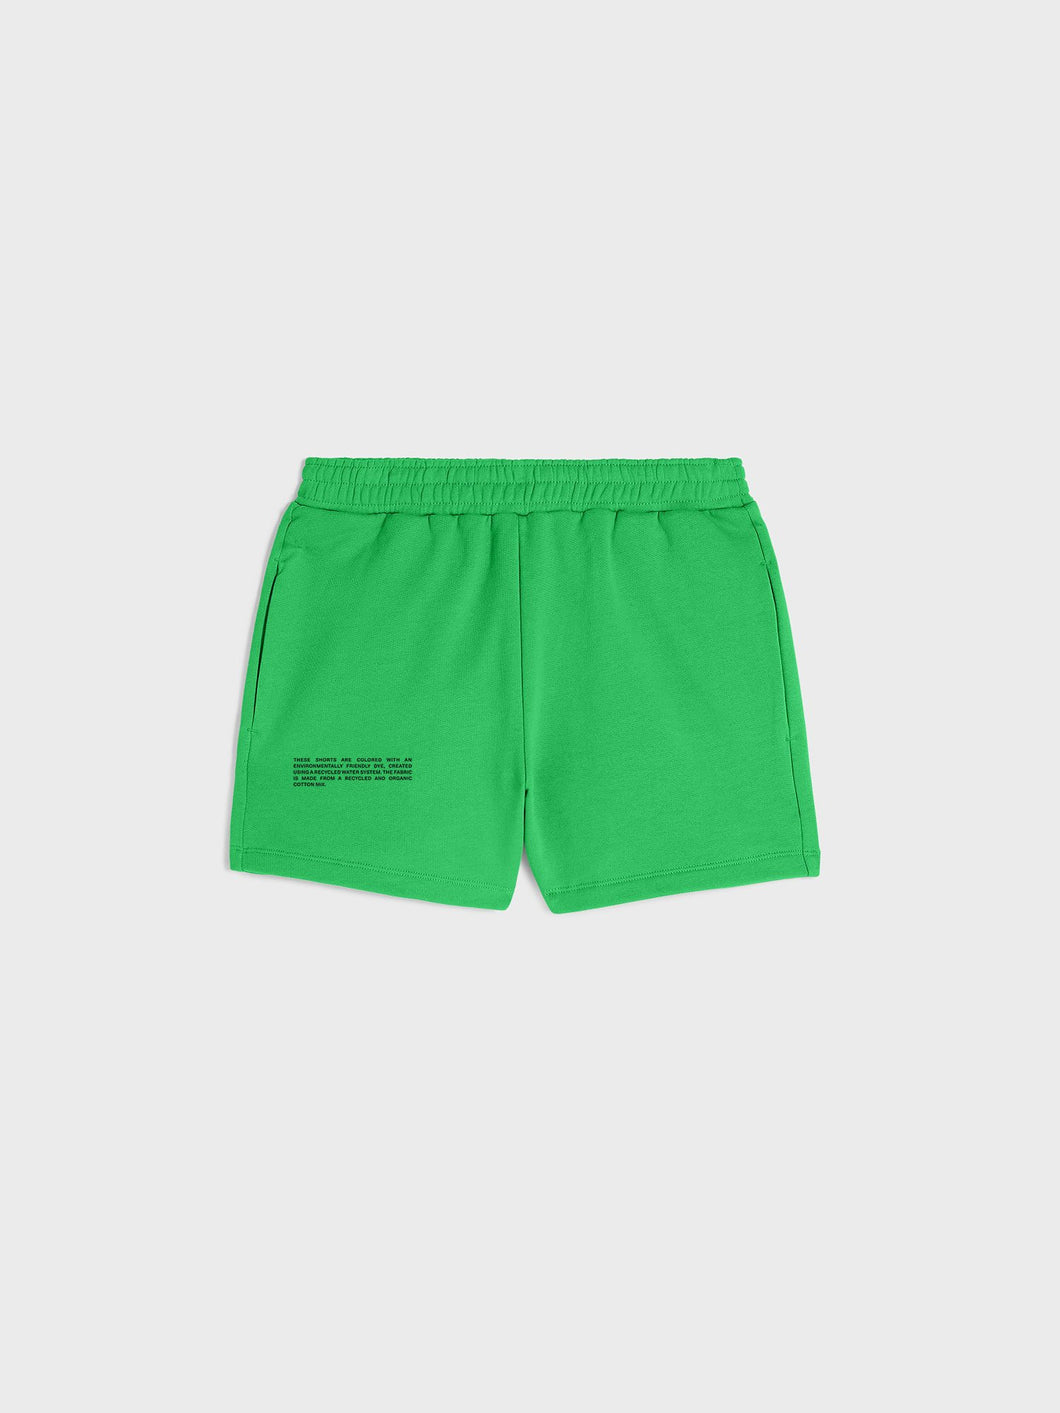 Jade Green Shorts.